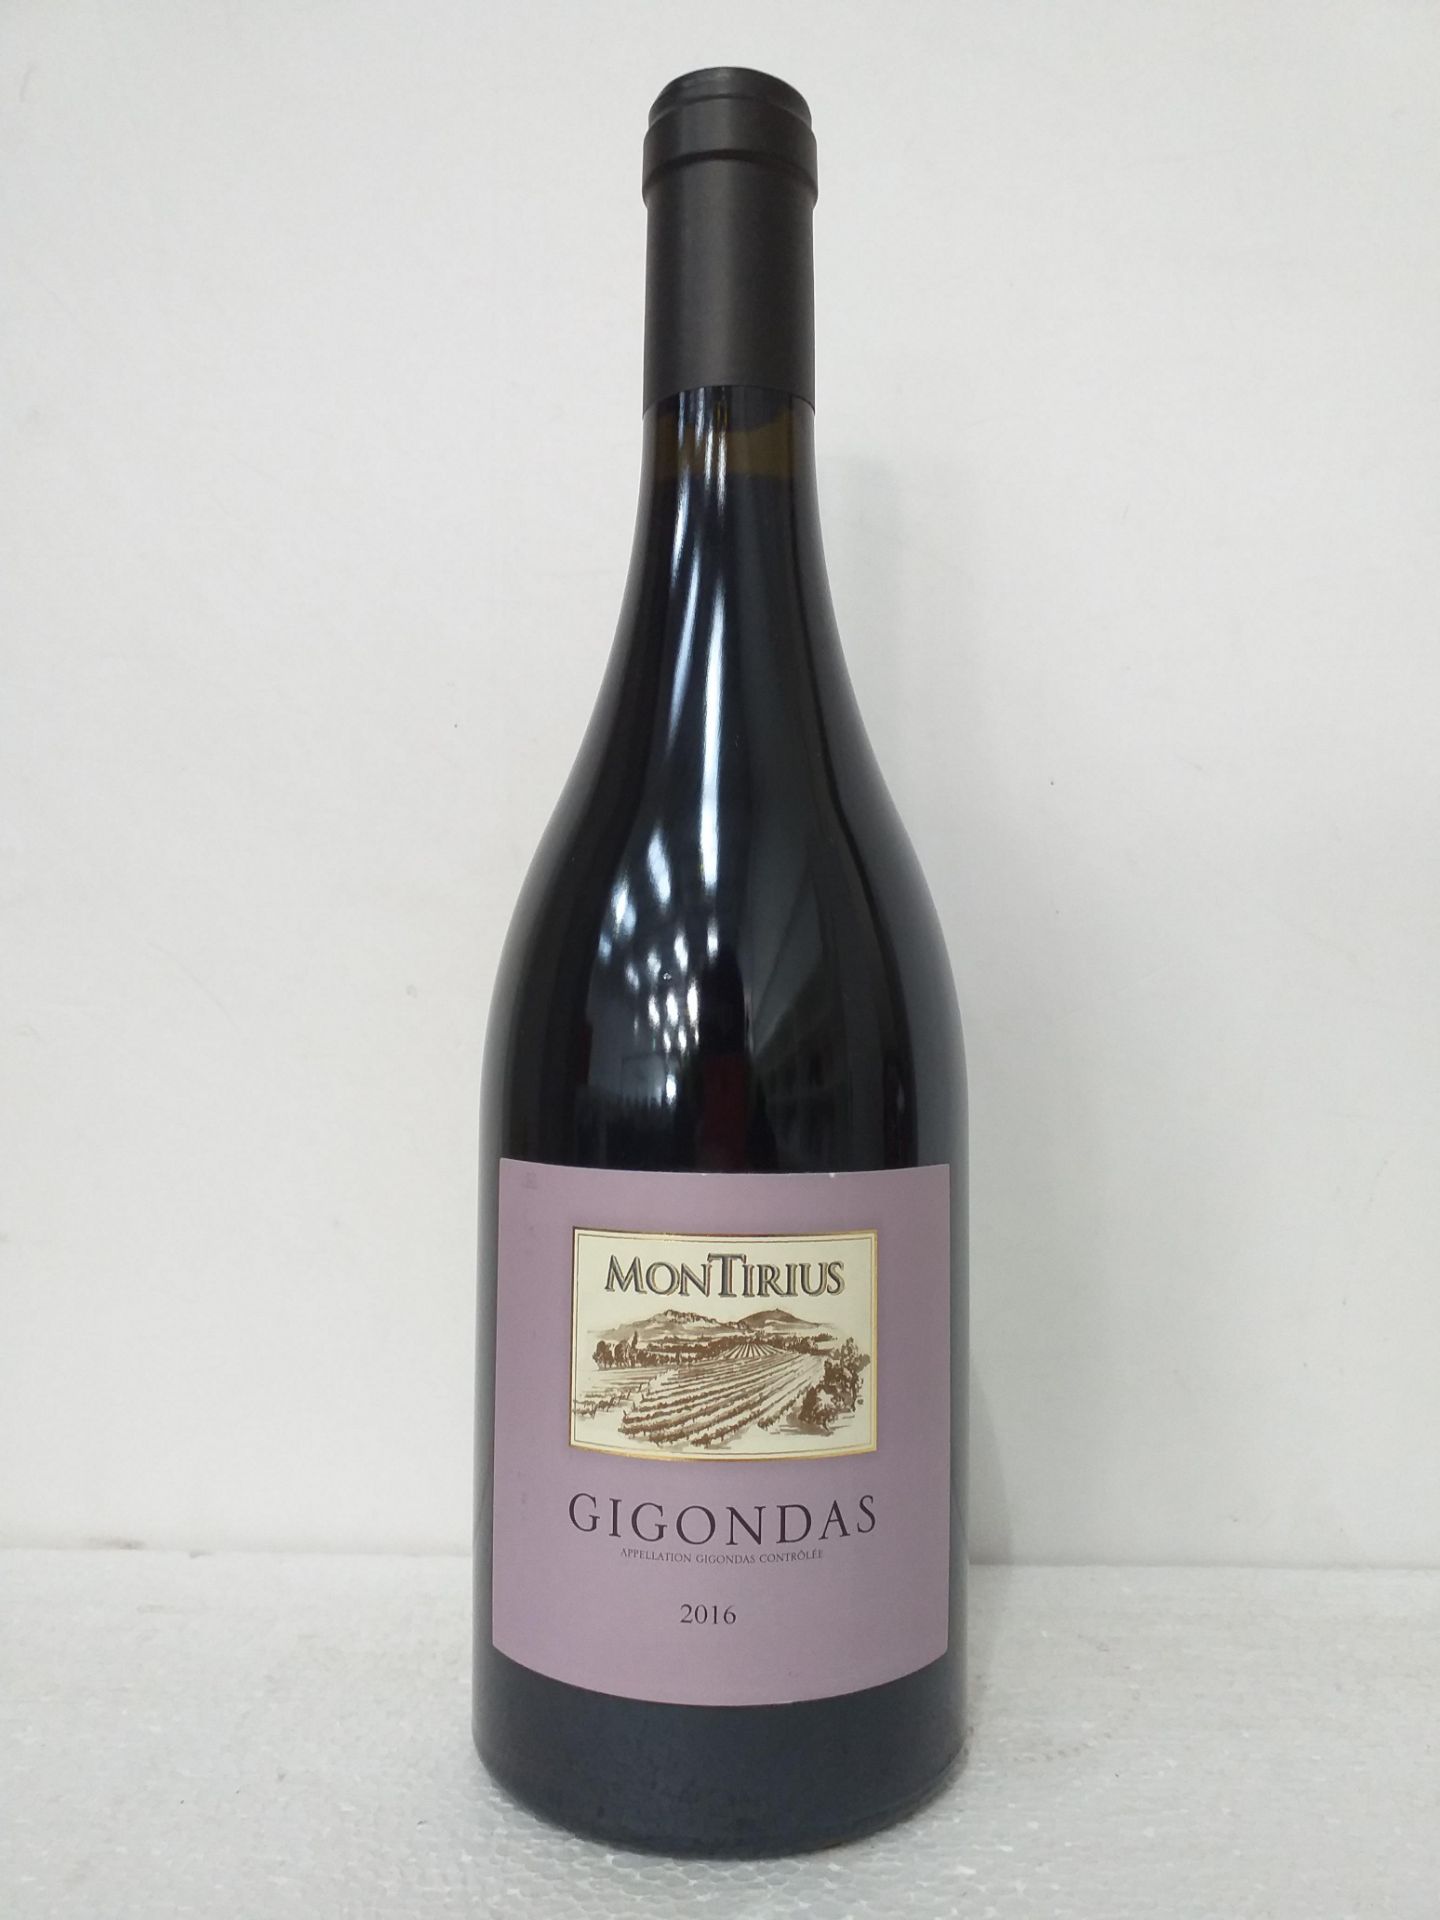 6 Bottles of Montirius Gigondas